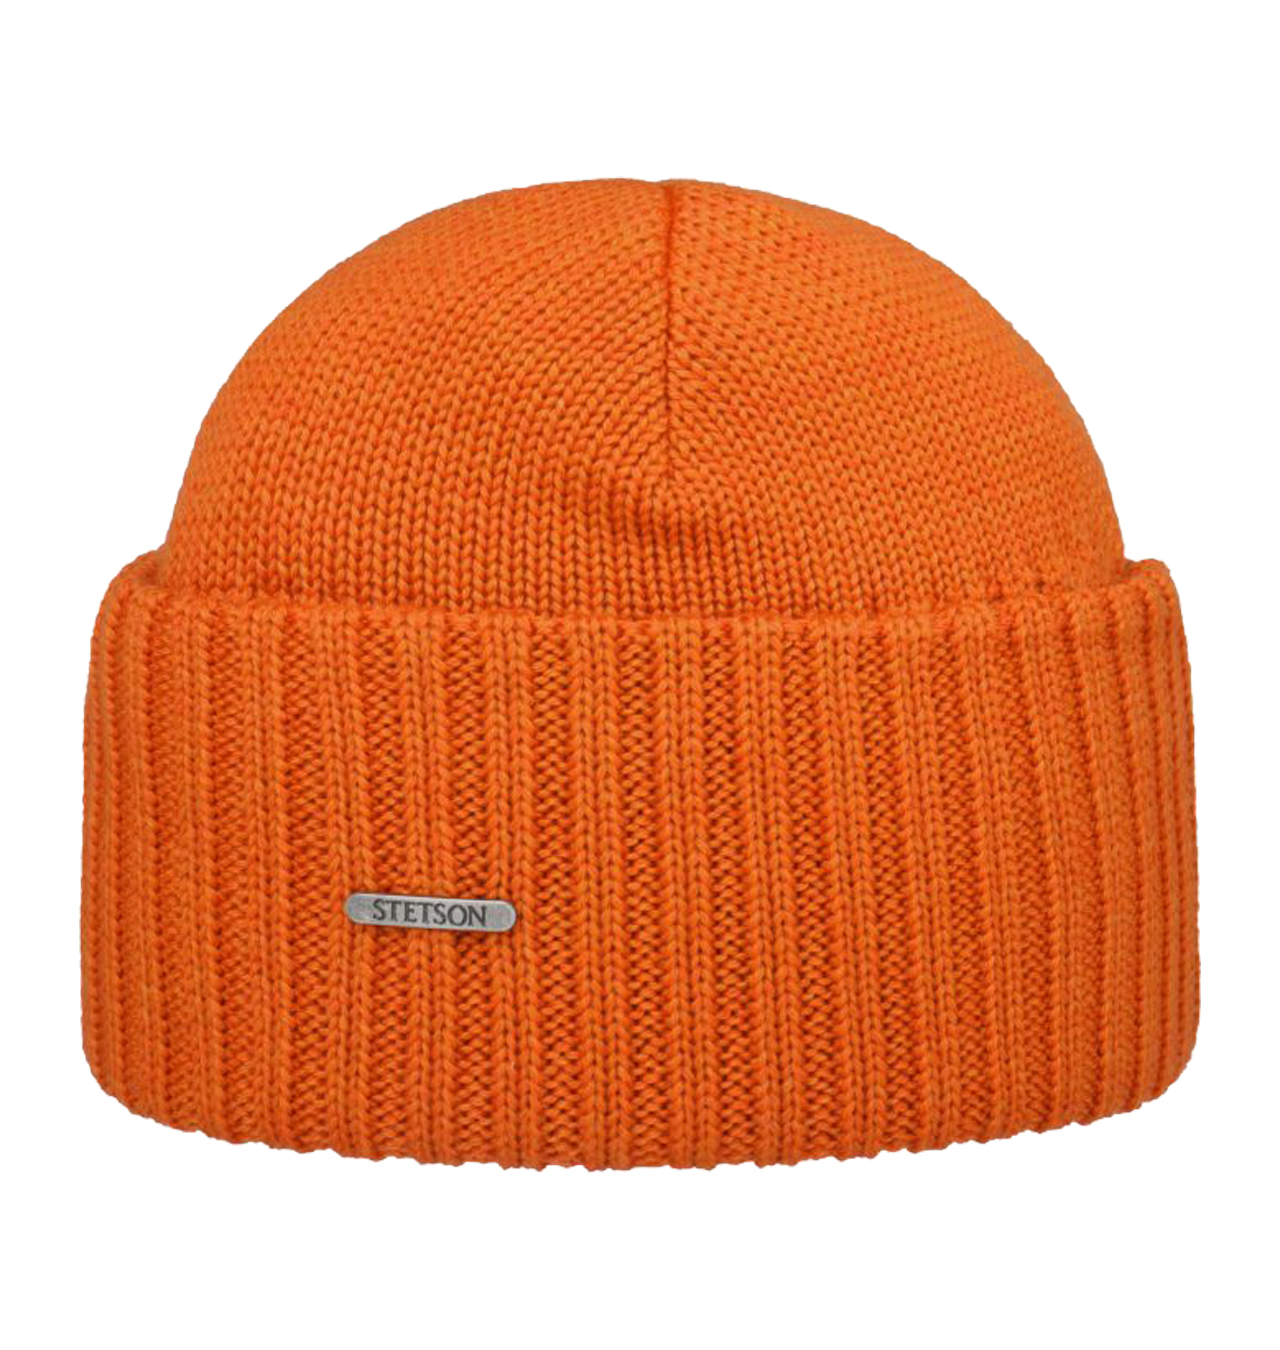 Stetson - Northport Wool Beanie - Flame Orange